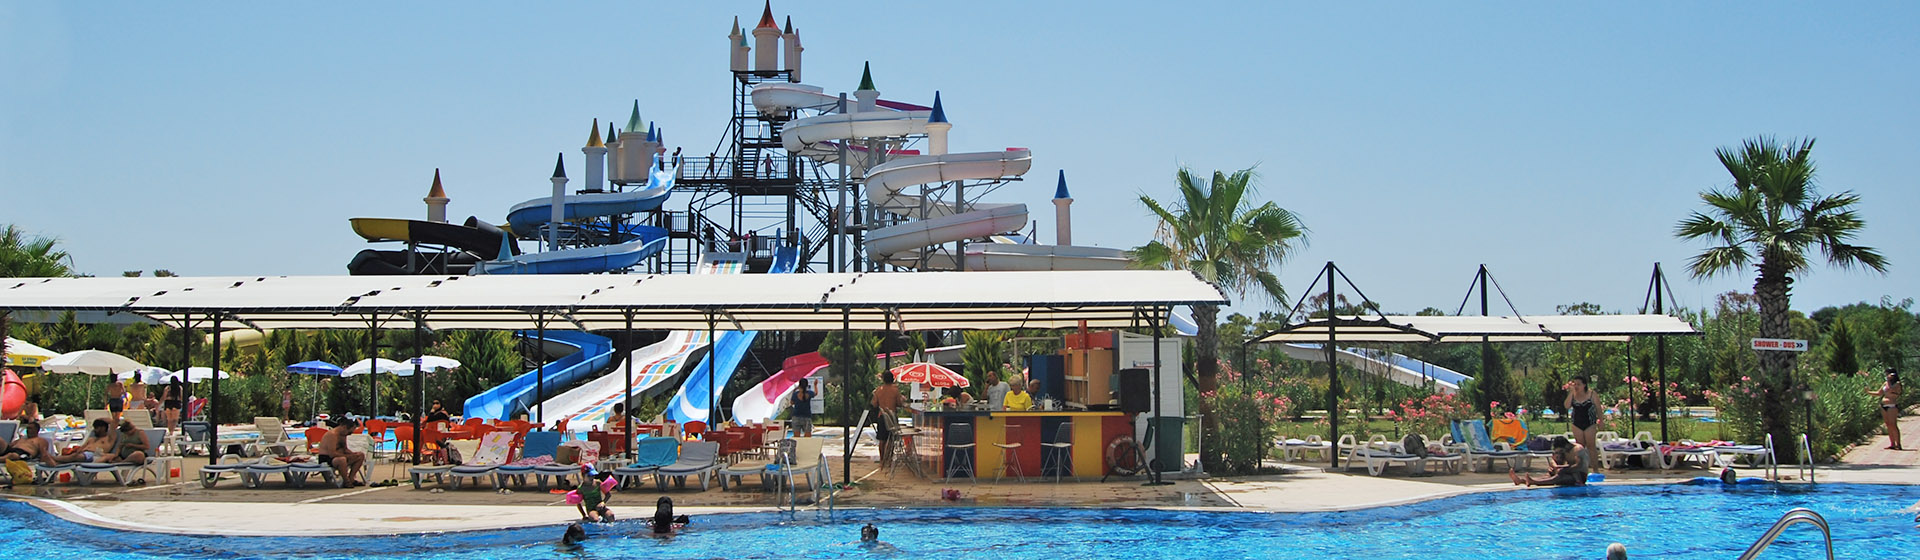 Havuz, Deniz, Eğlence ve Konfor Park Aqua Aparts'da